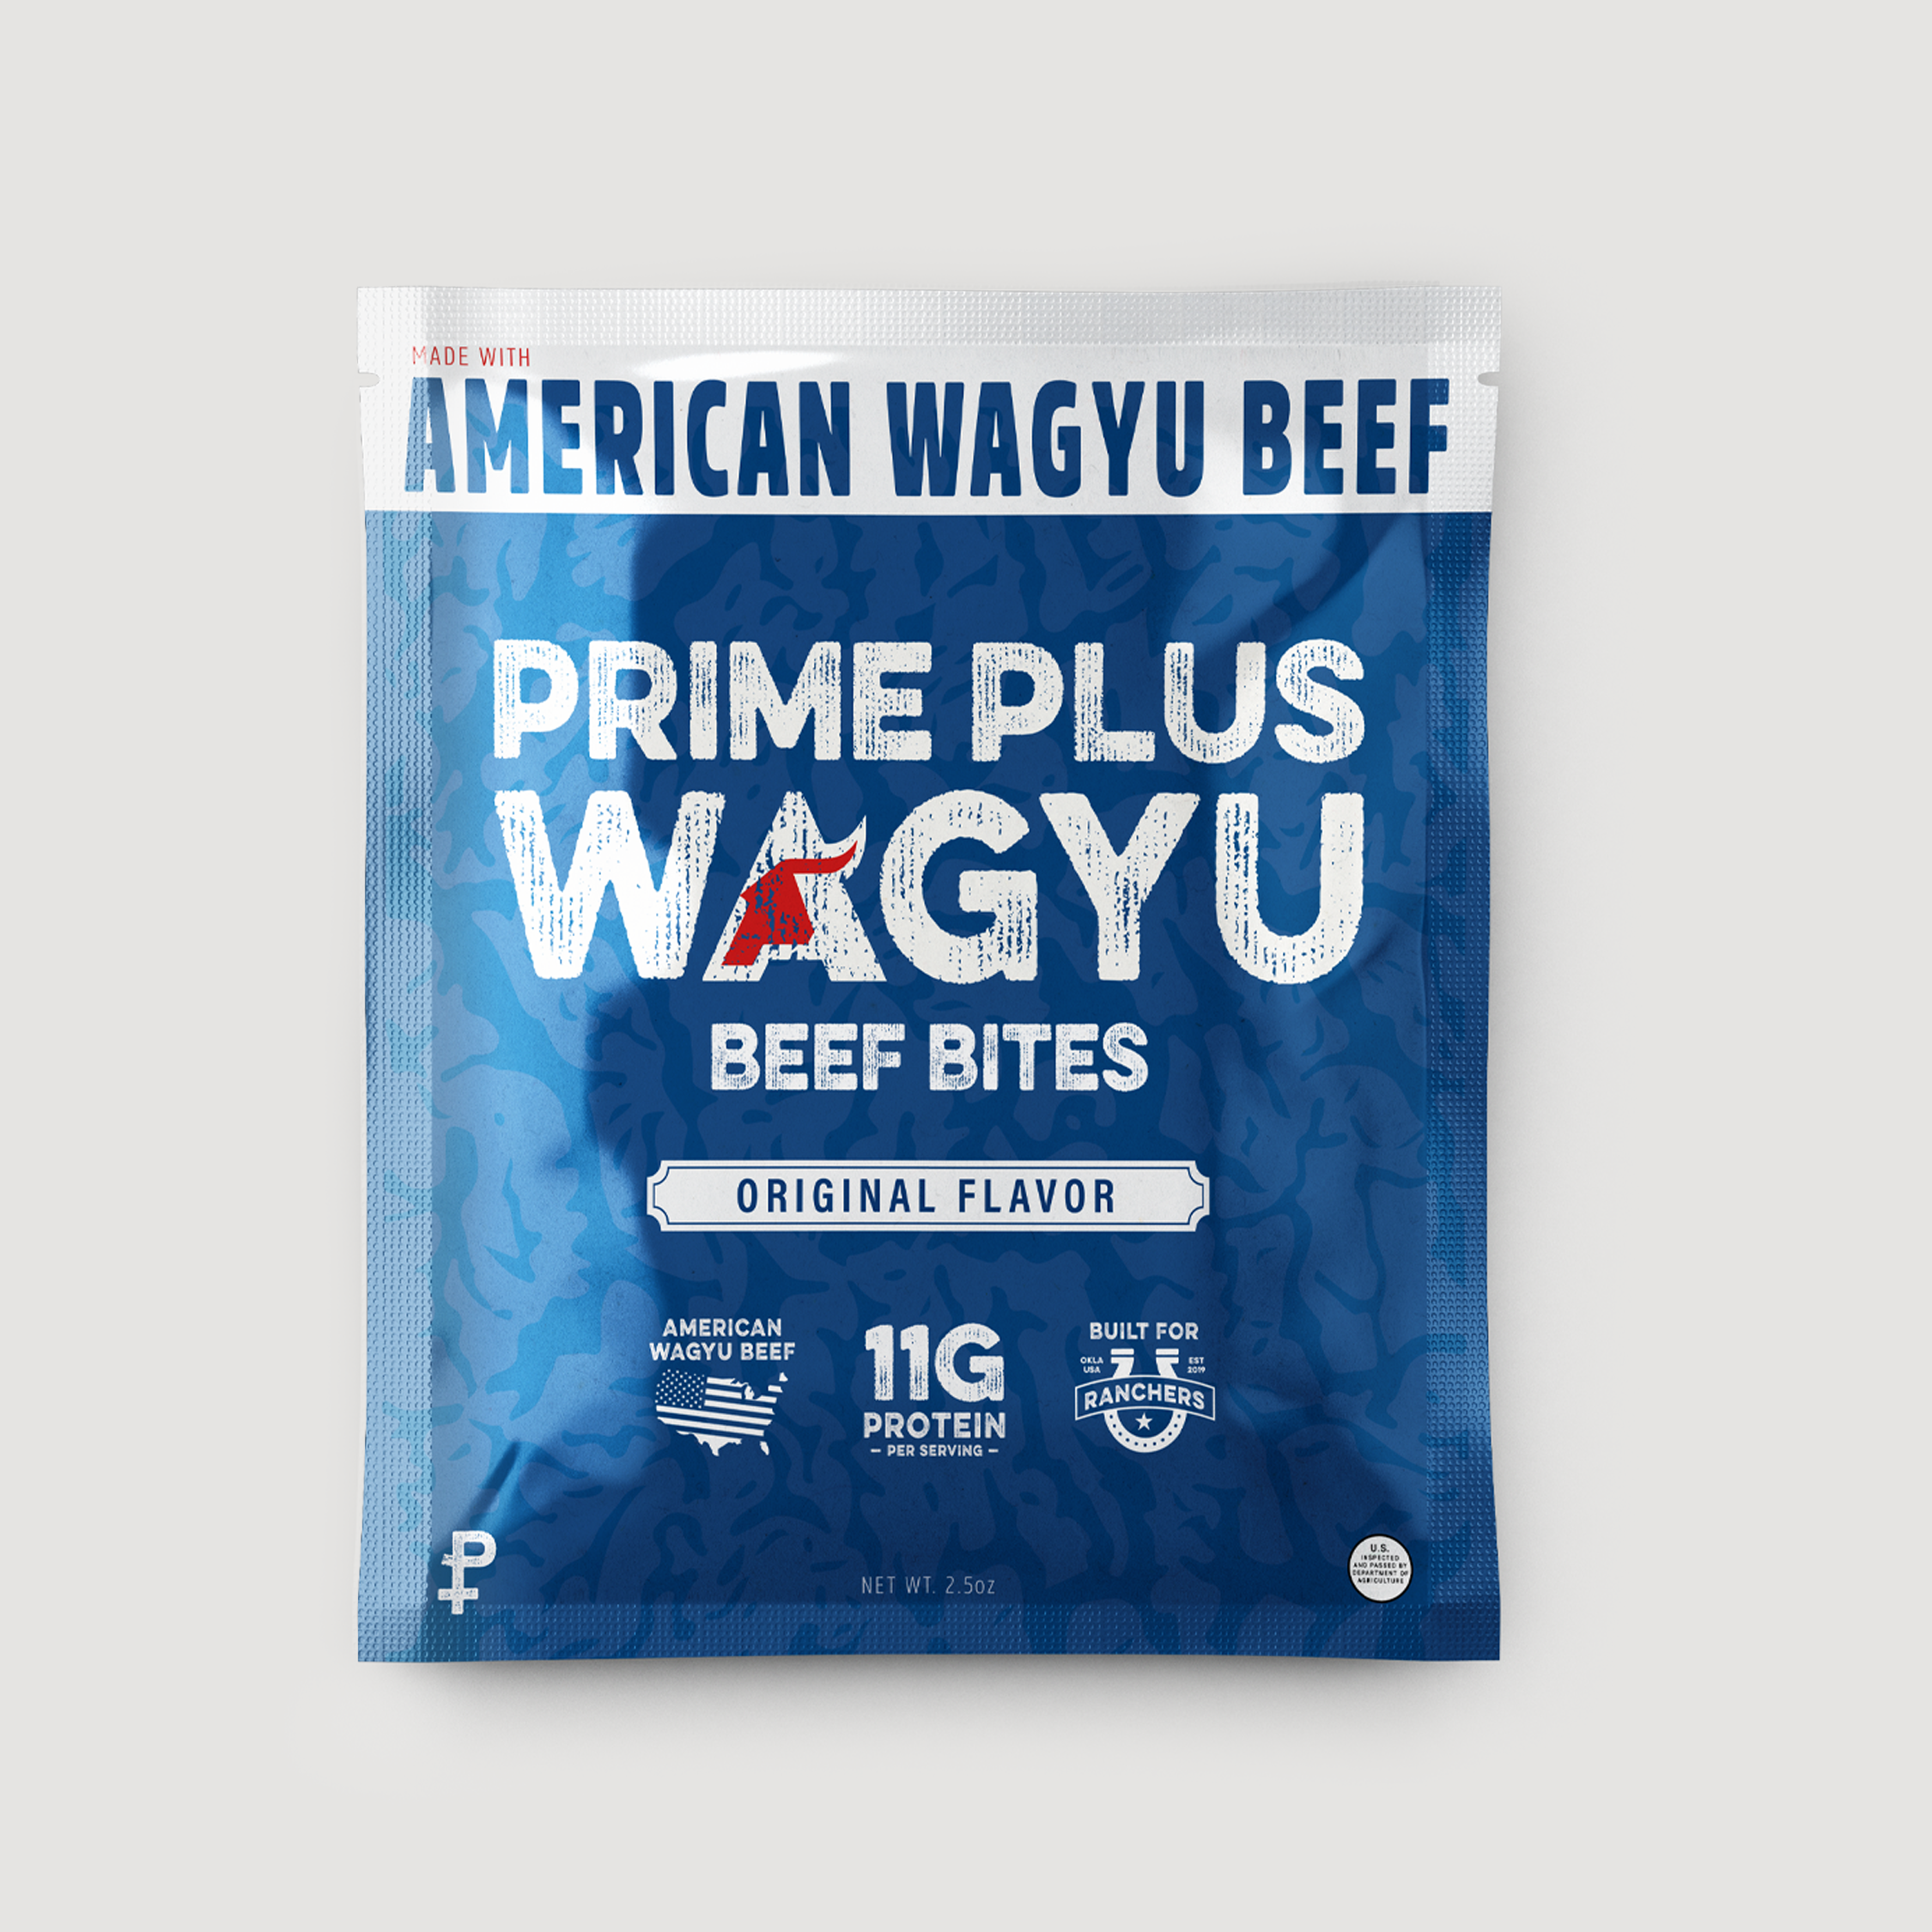 Prime Plus Wagyu - Original (4 bags)